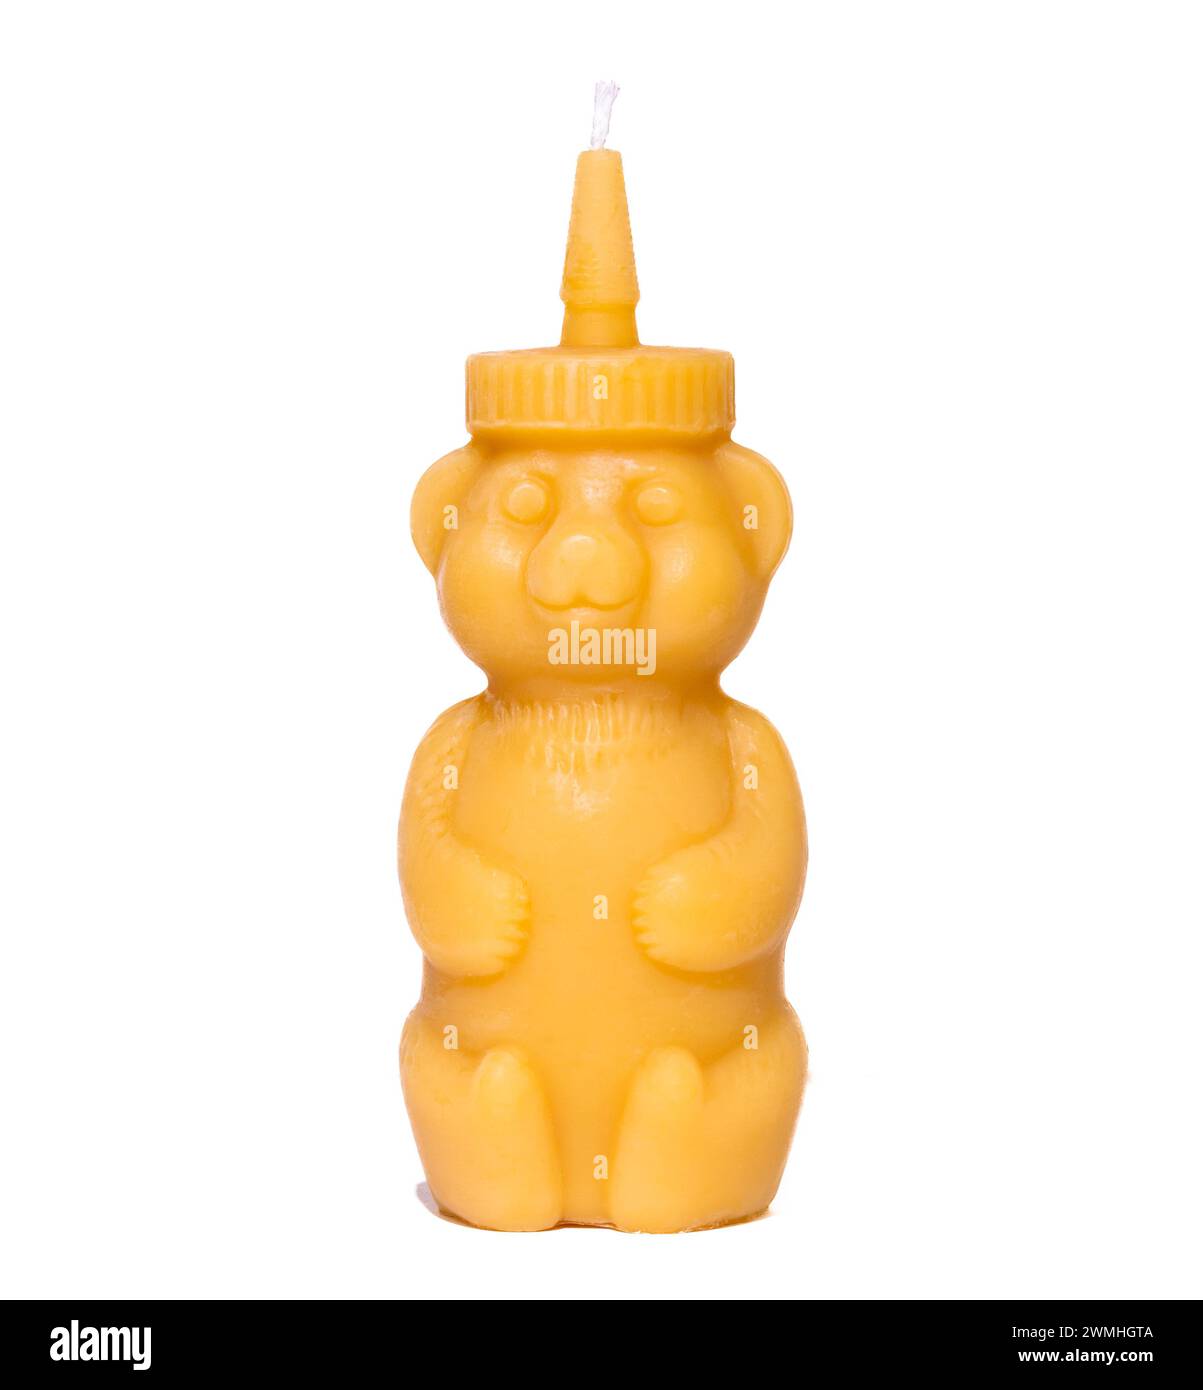 Beeswax candle shaped like a honey bear on white background Stock Photo